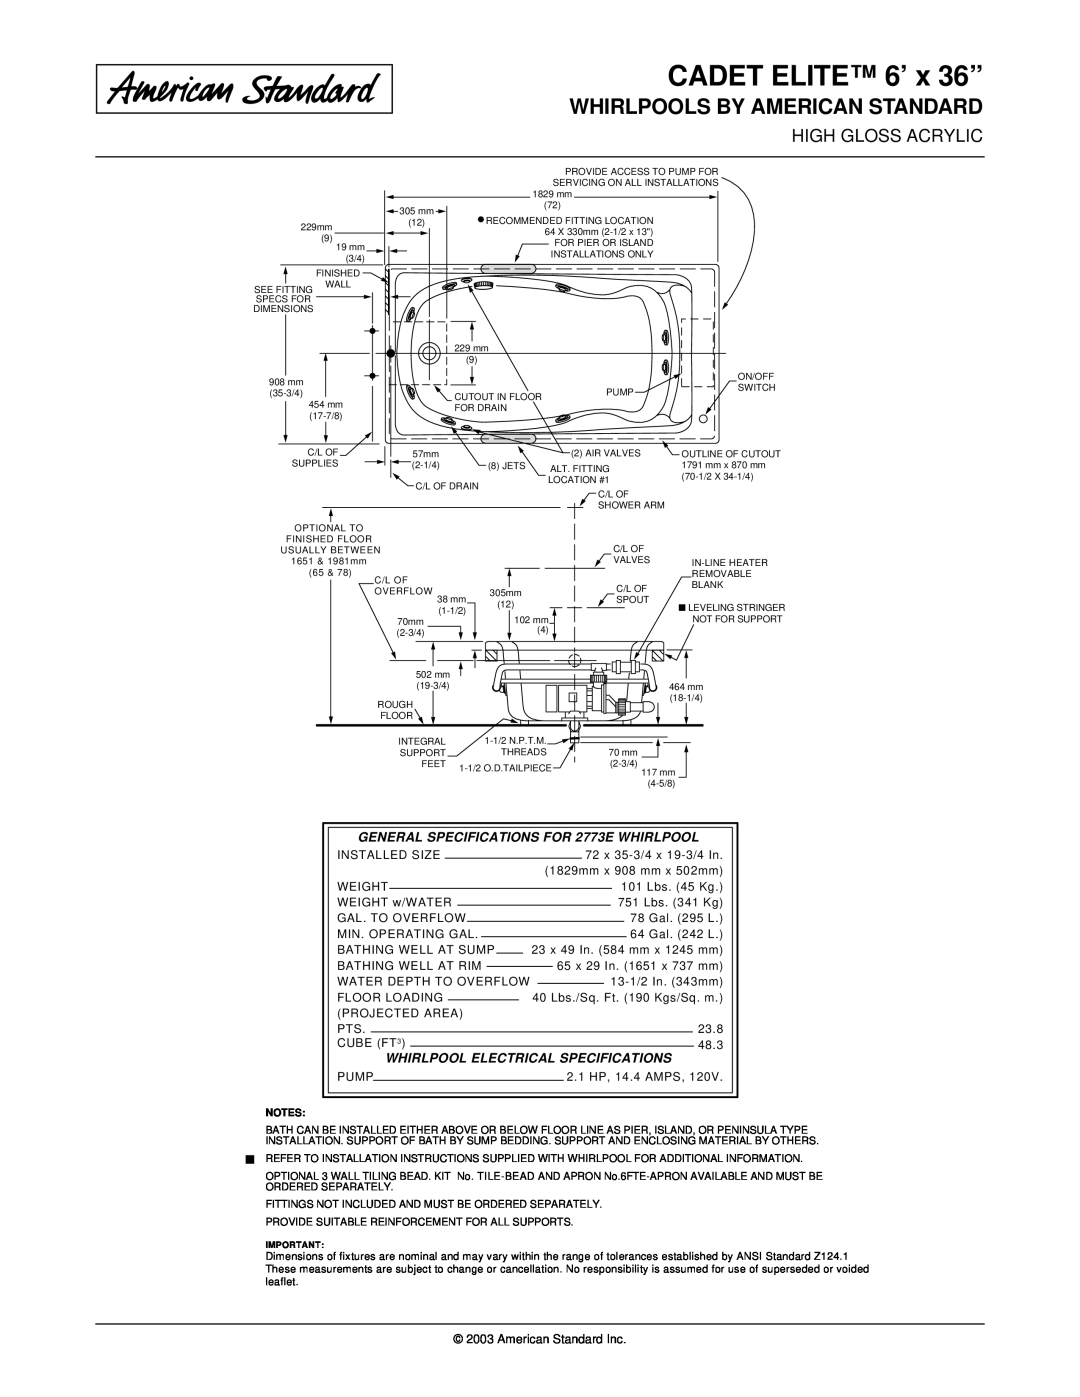 American Standard SPS 2773E CADET ELITE 6’ x 36”, Whirlpools By American Standard, Whirlpool Electrical Specifications 